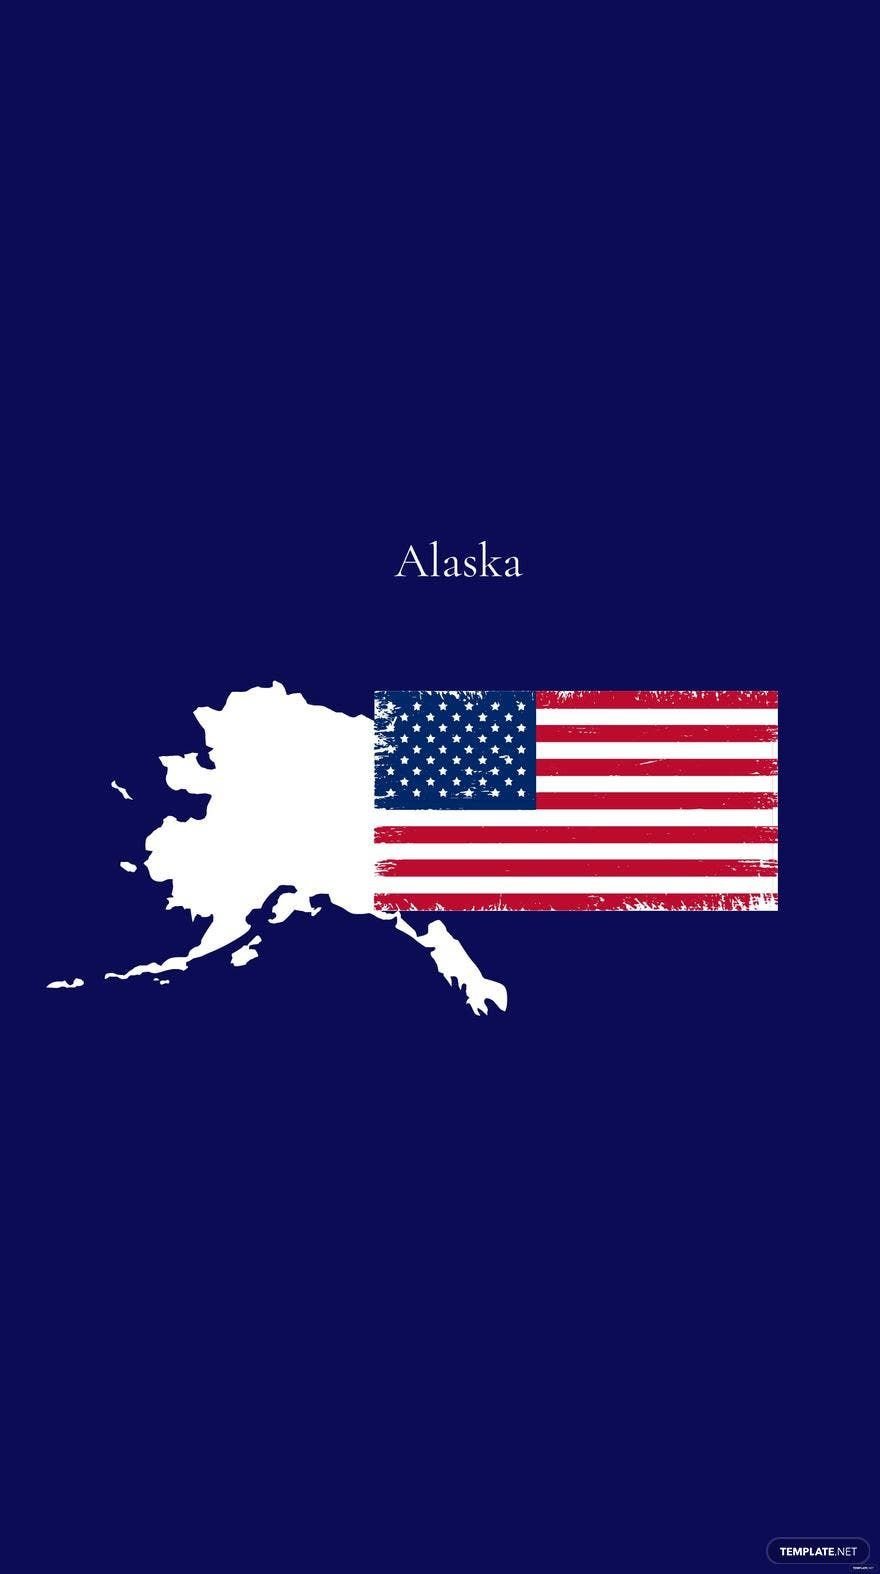 Free Alaska Day iPhone Background